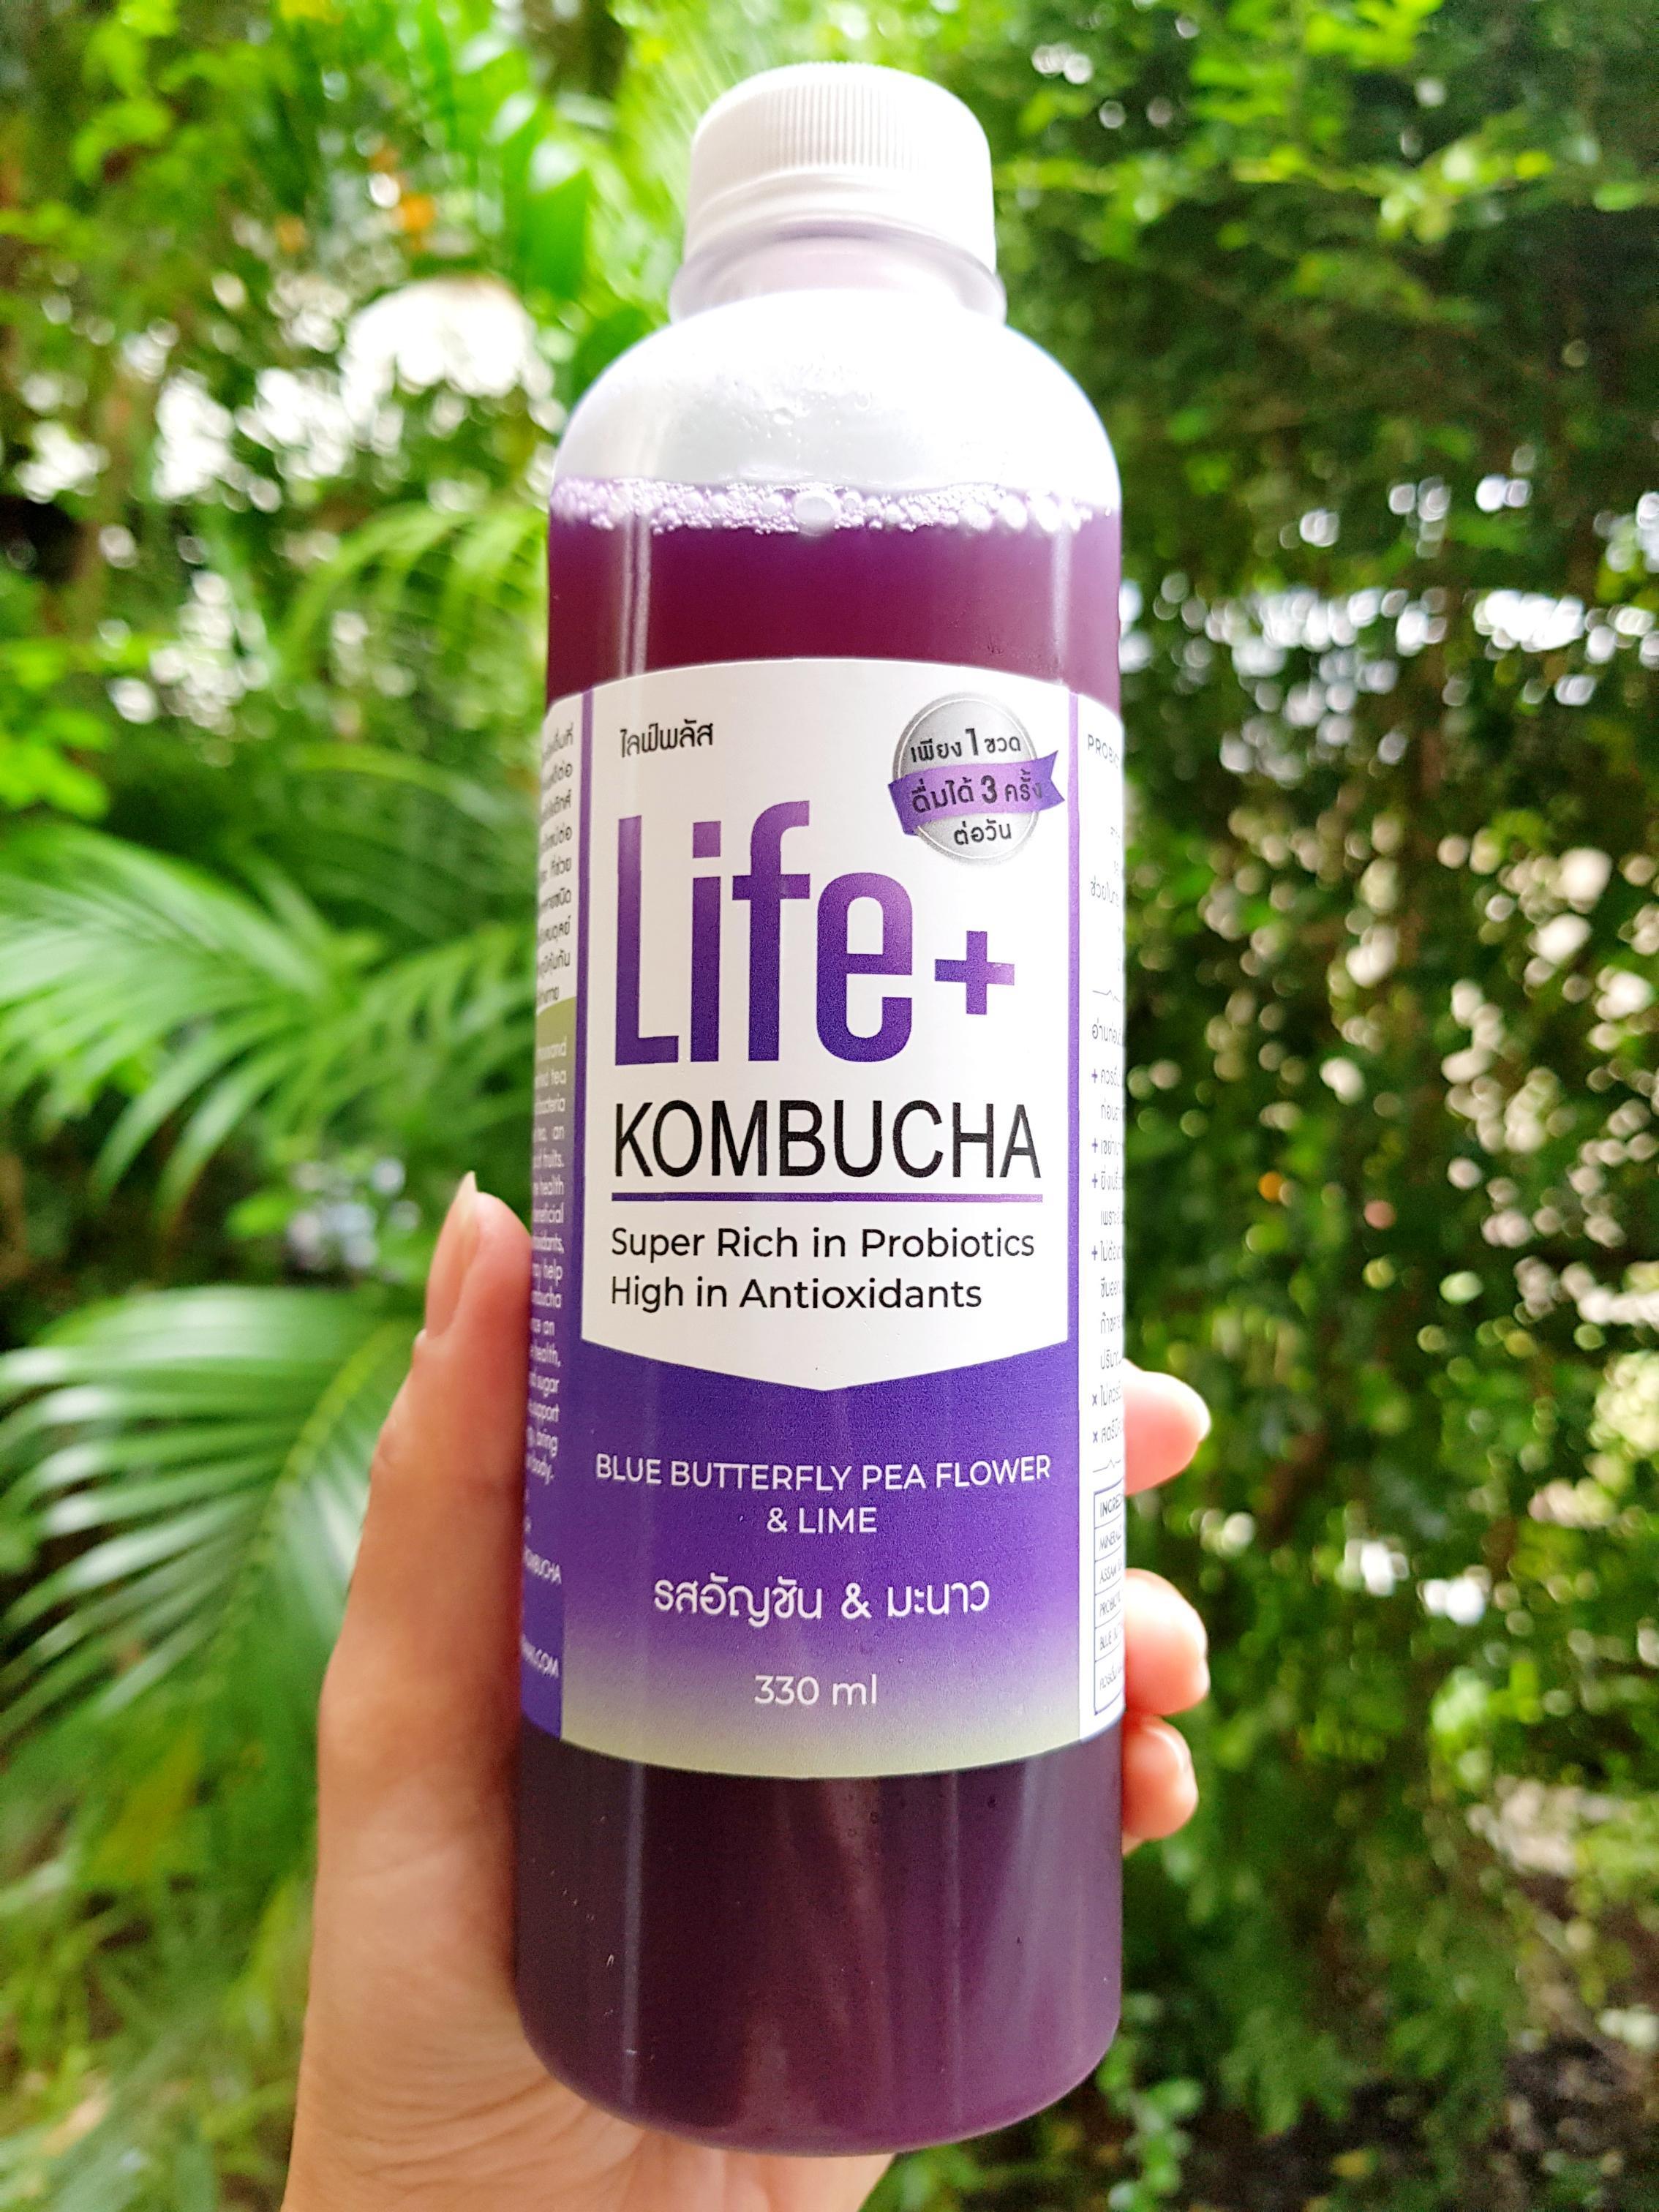 Life+ KOMBUCHA raw organic 330ml รสอัญชัน & มะนาว คอมบูชา คอมบูชะ ชาหมัก ดีท็อกซ์ ท้องผูก โพรไบโอติก สารต้านอนุมูลอิสระ คอมบูฉะ detox probiotic antioxidant สุขภาพ